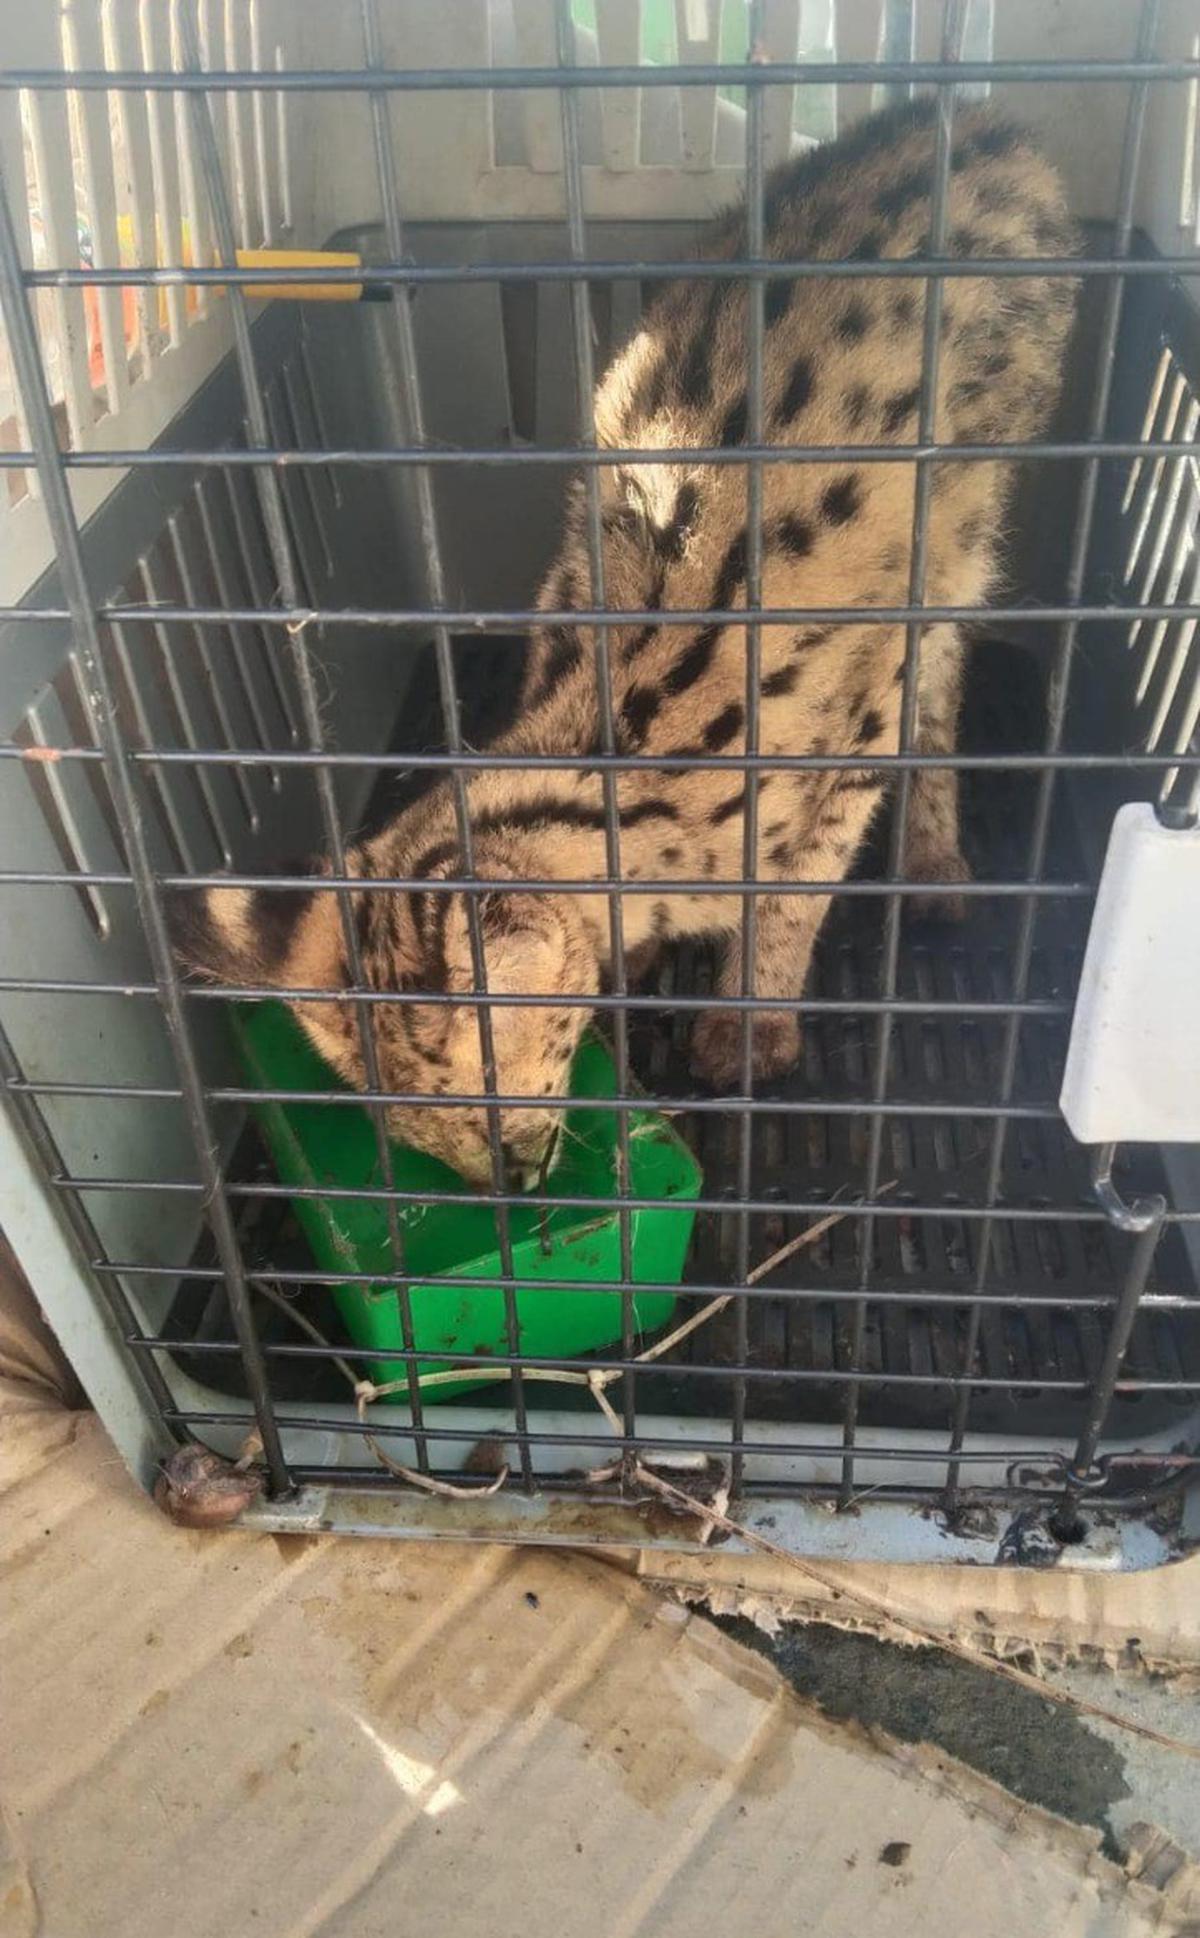 A serval cat was seized in Champhai district of Mizoram.